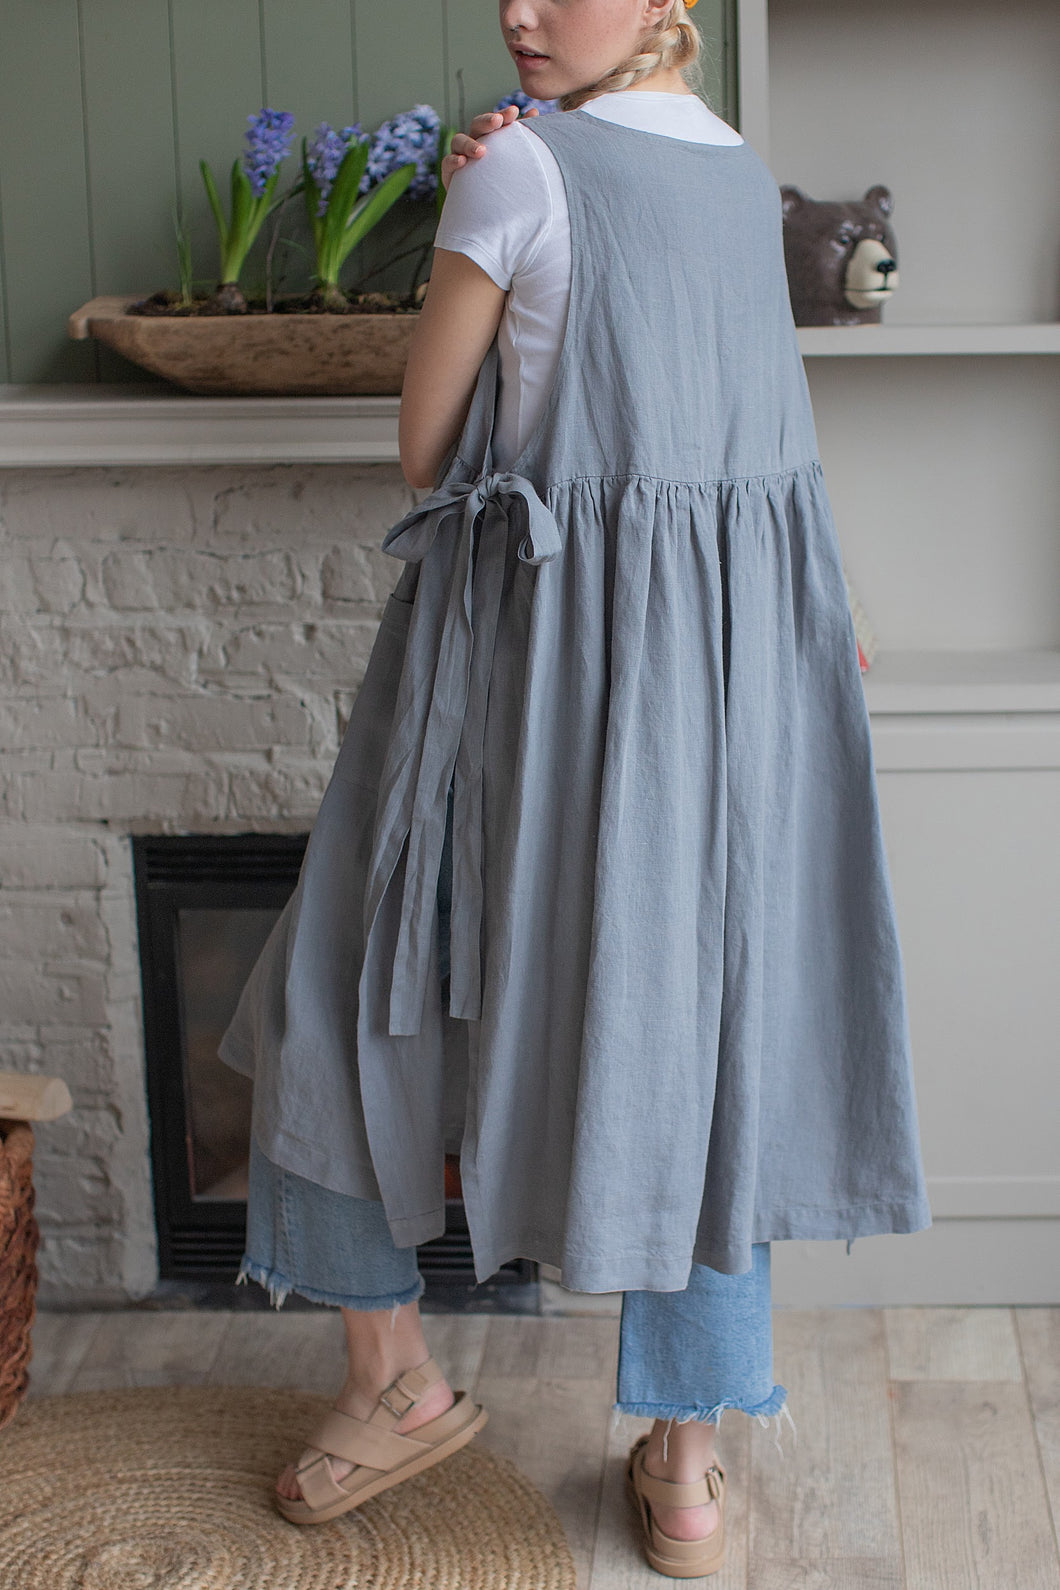 100% Linen Cottage Dress Apron in BlueGrey